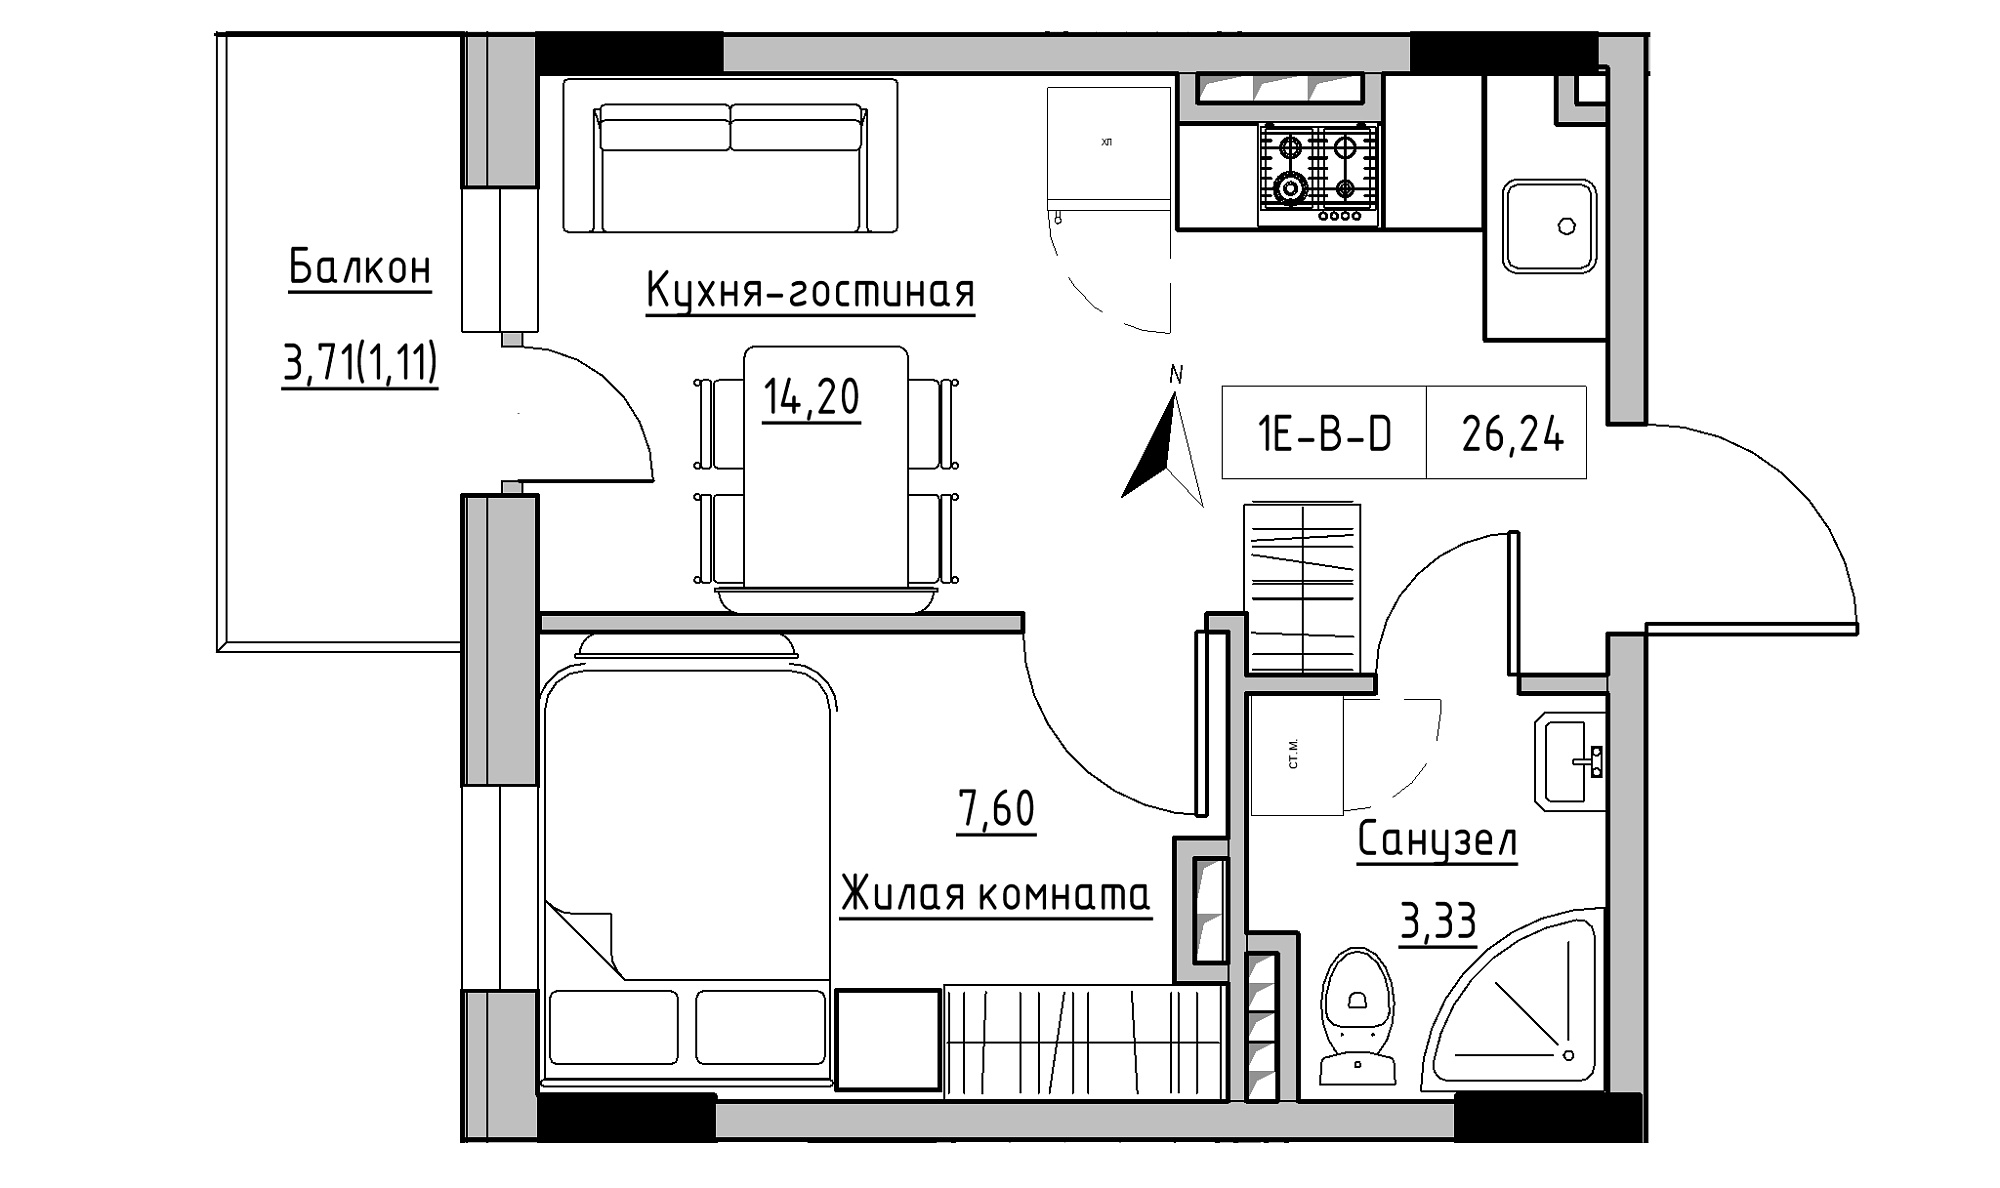 Planning 1-rm flats area 26.24m2, KS-025-04/0005.